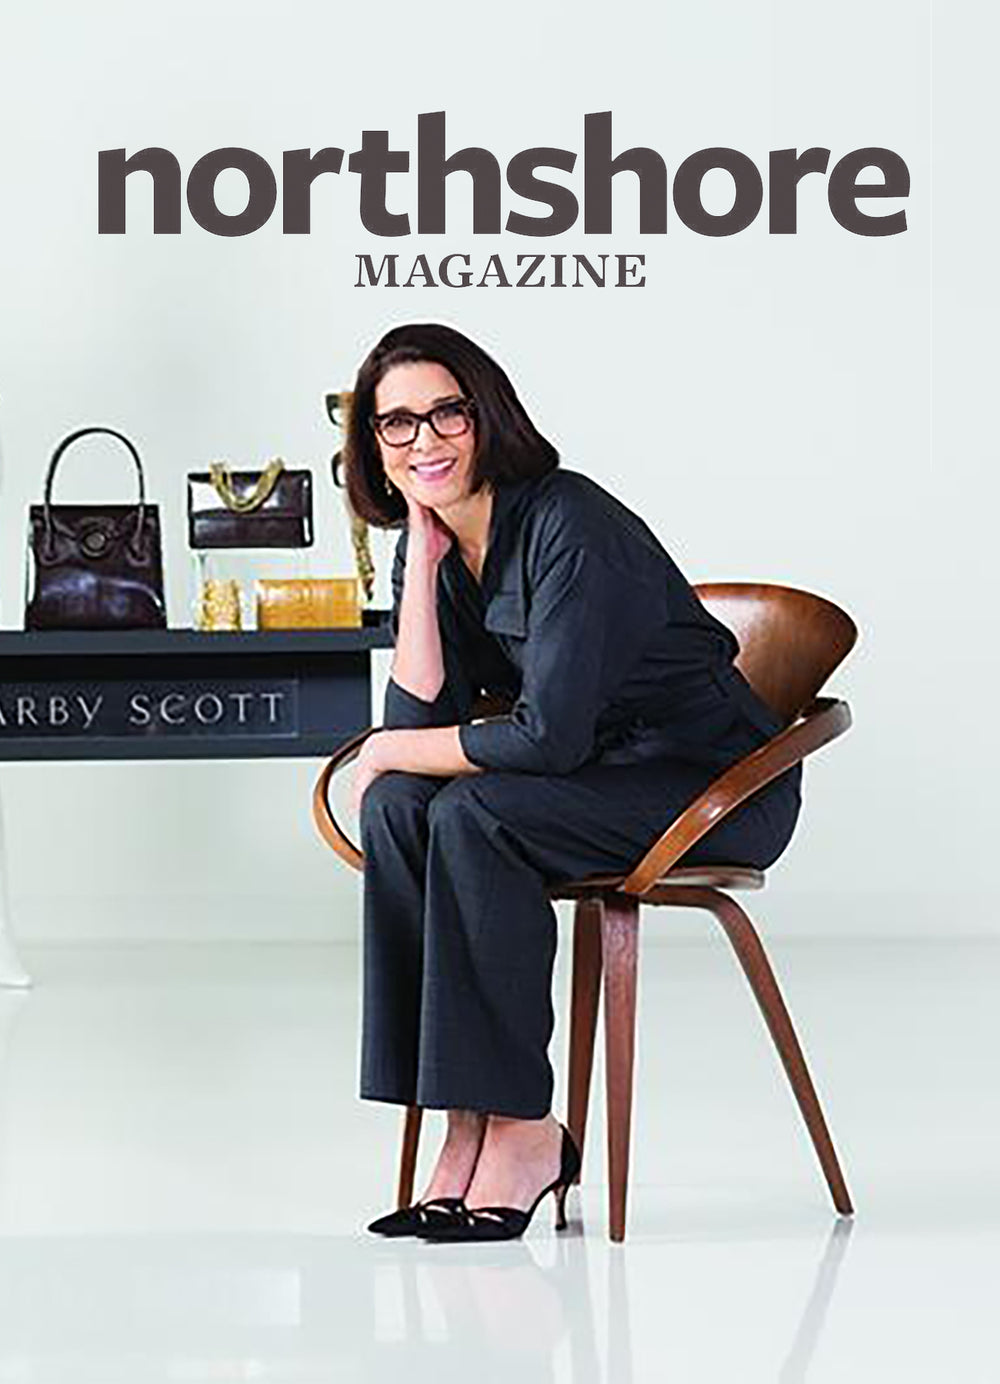 Designer Darby Scott on cover of North Shore magazine